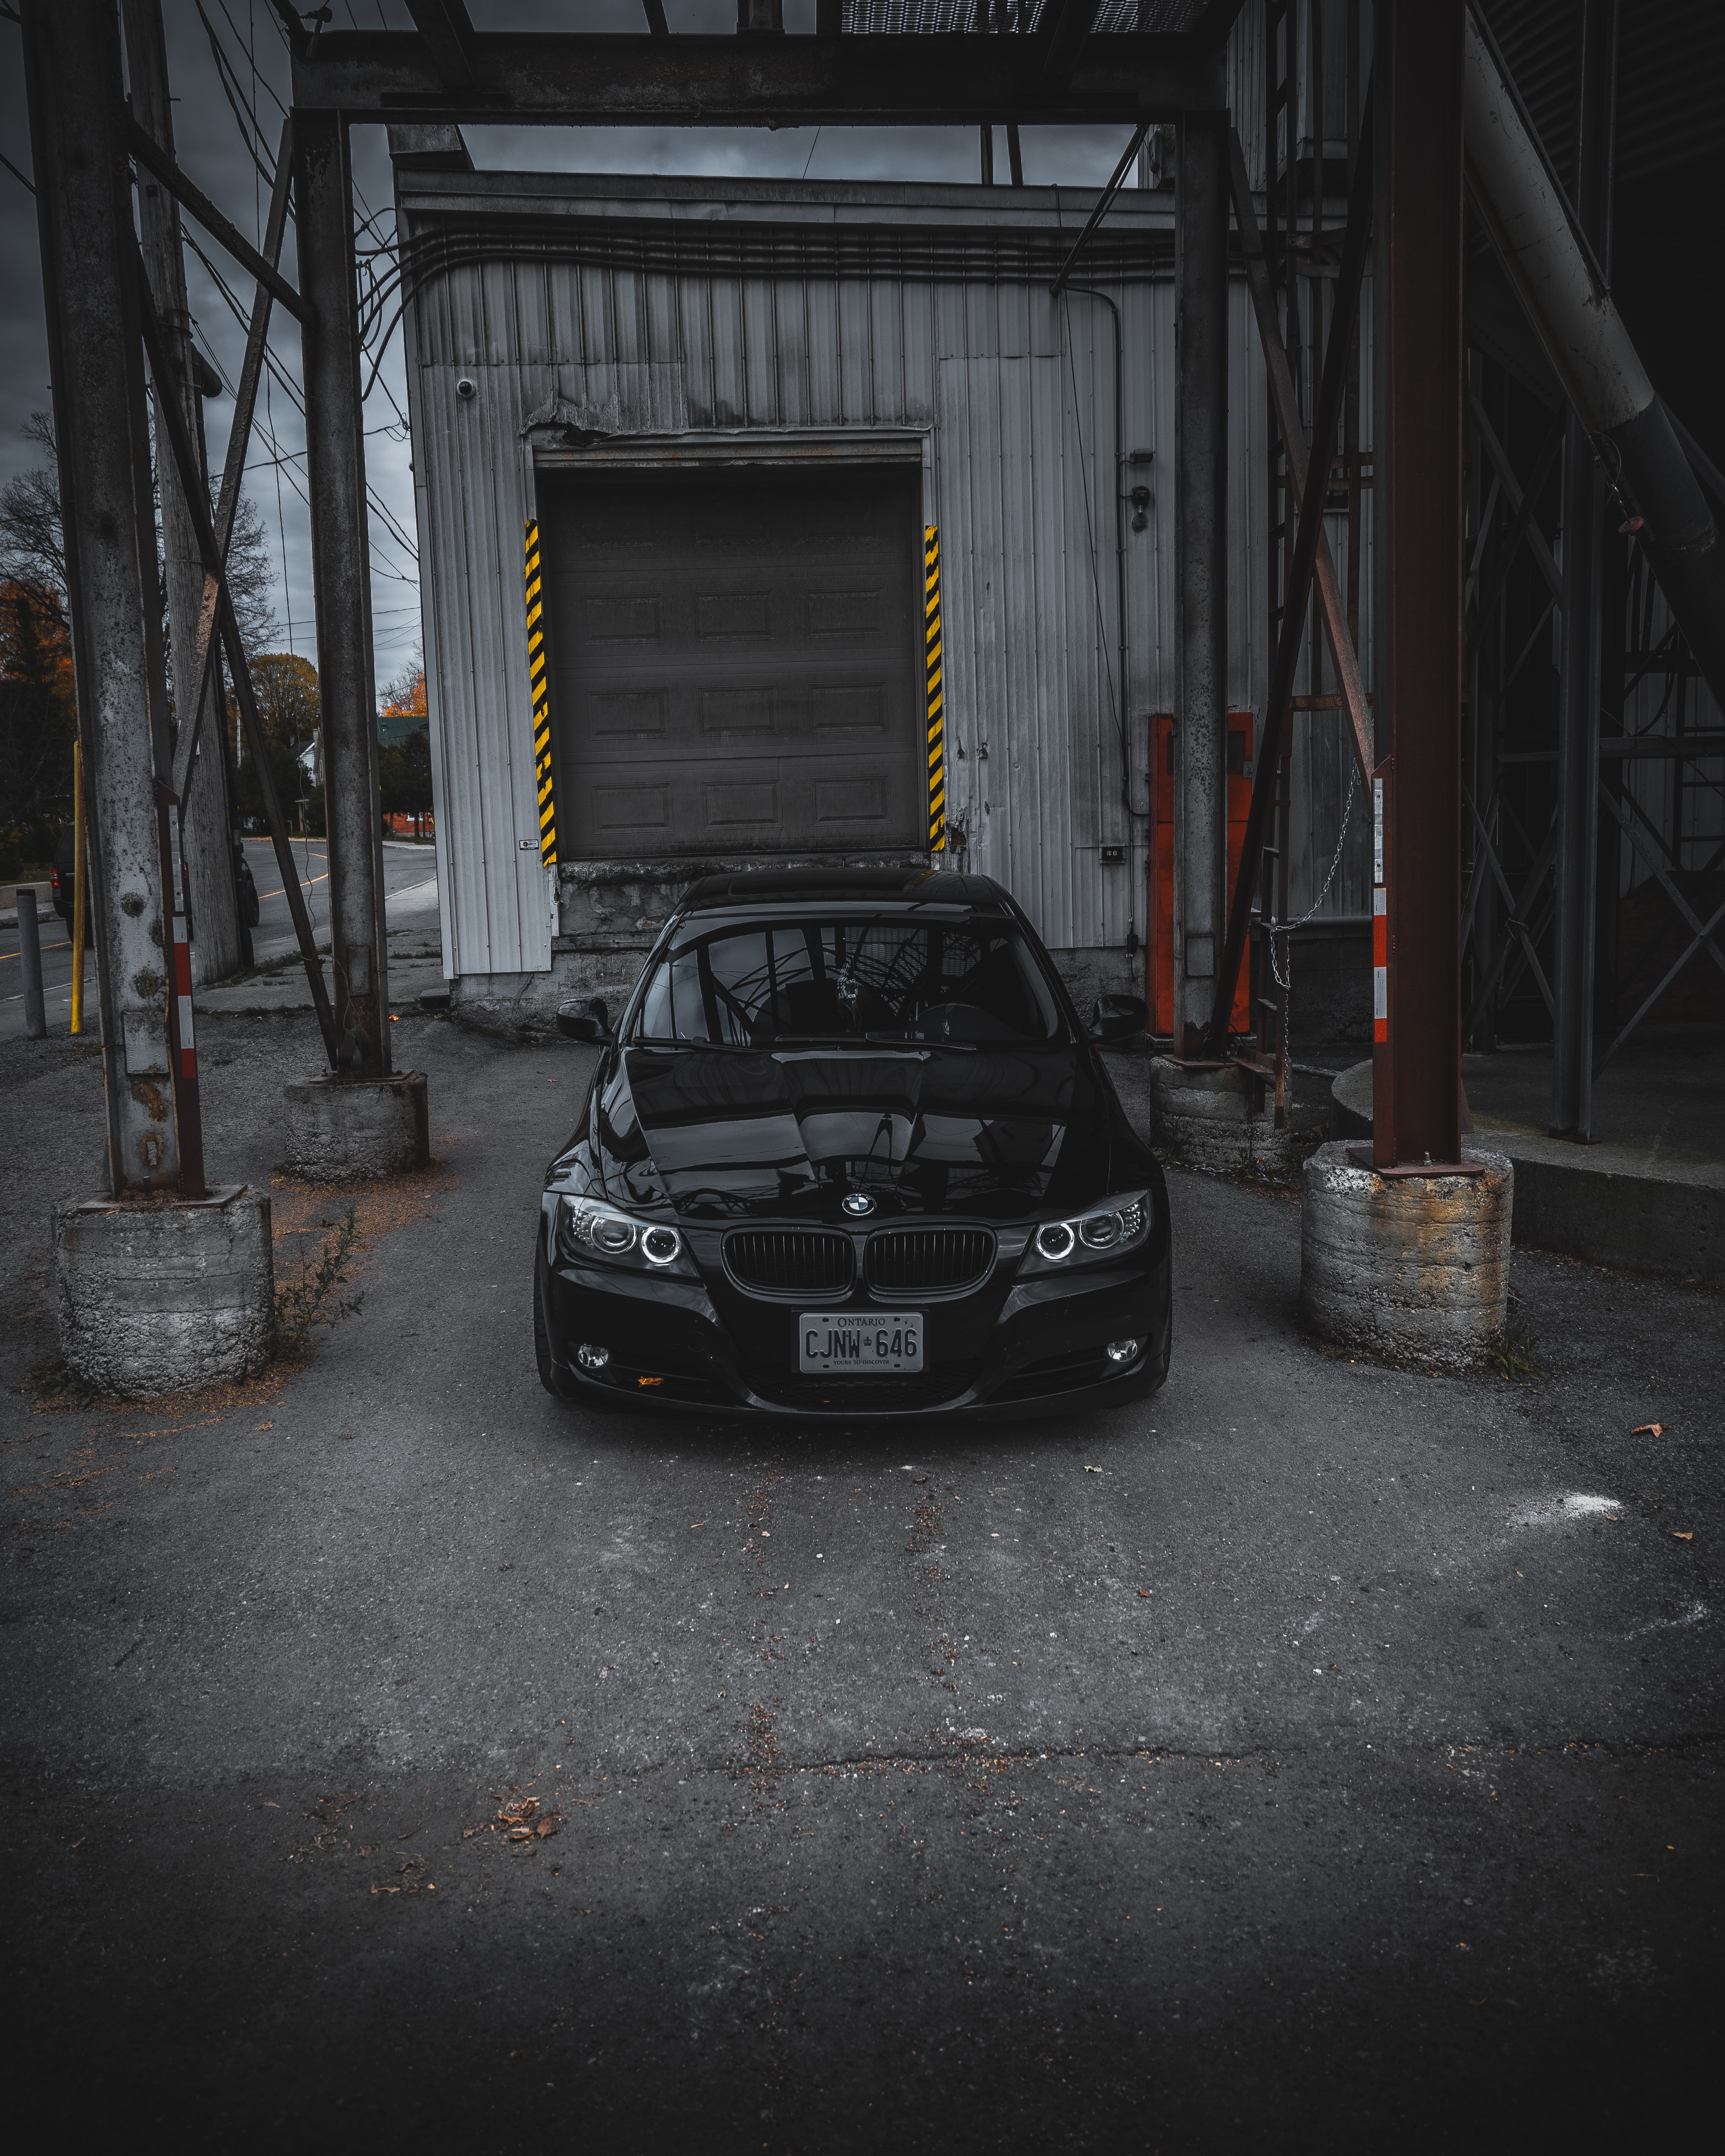 bmw, car, cars, black, front view, garage